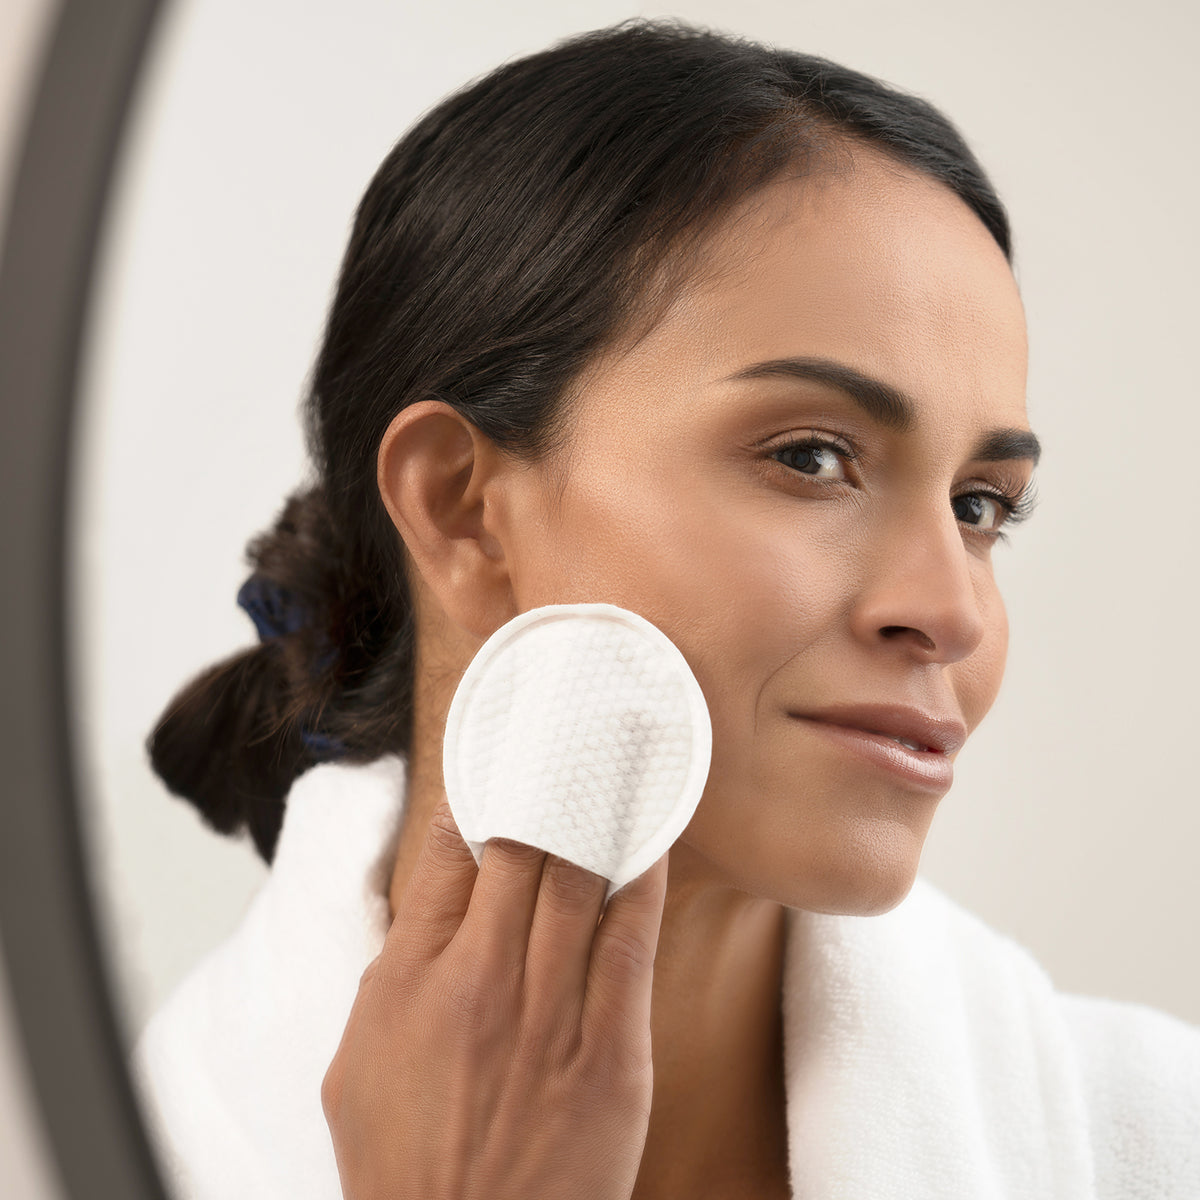 Obagi Revivify Multi-Acid Facial Peel - Totality Medispa and Skincare